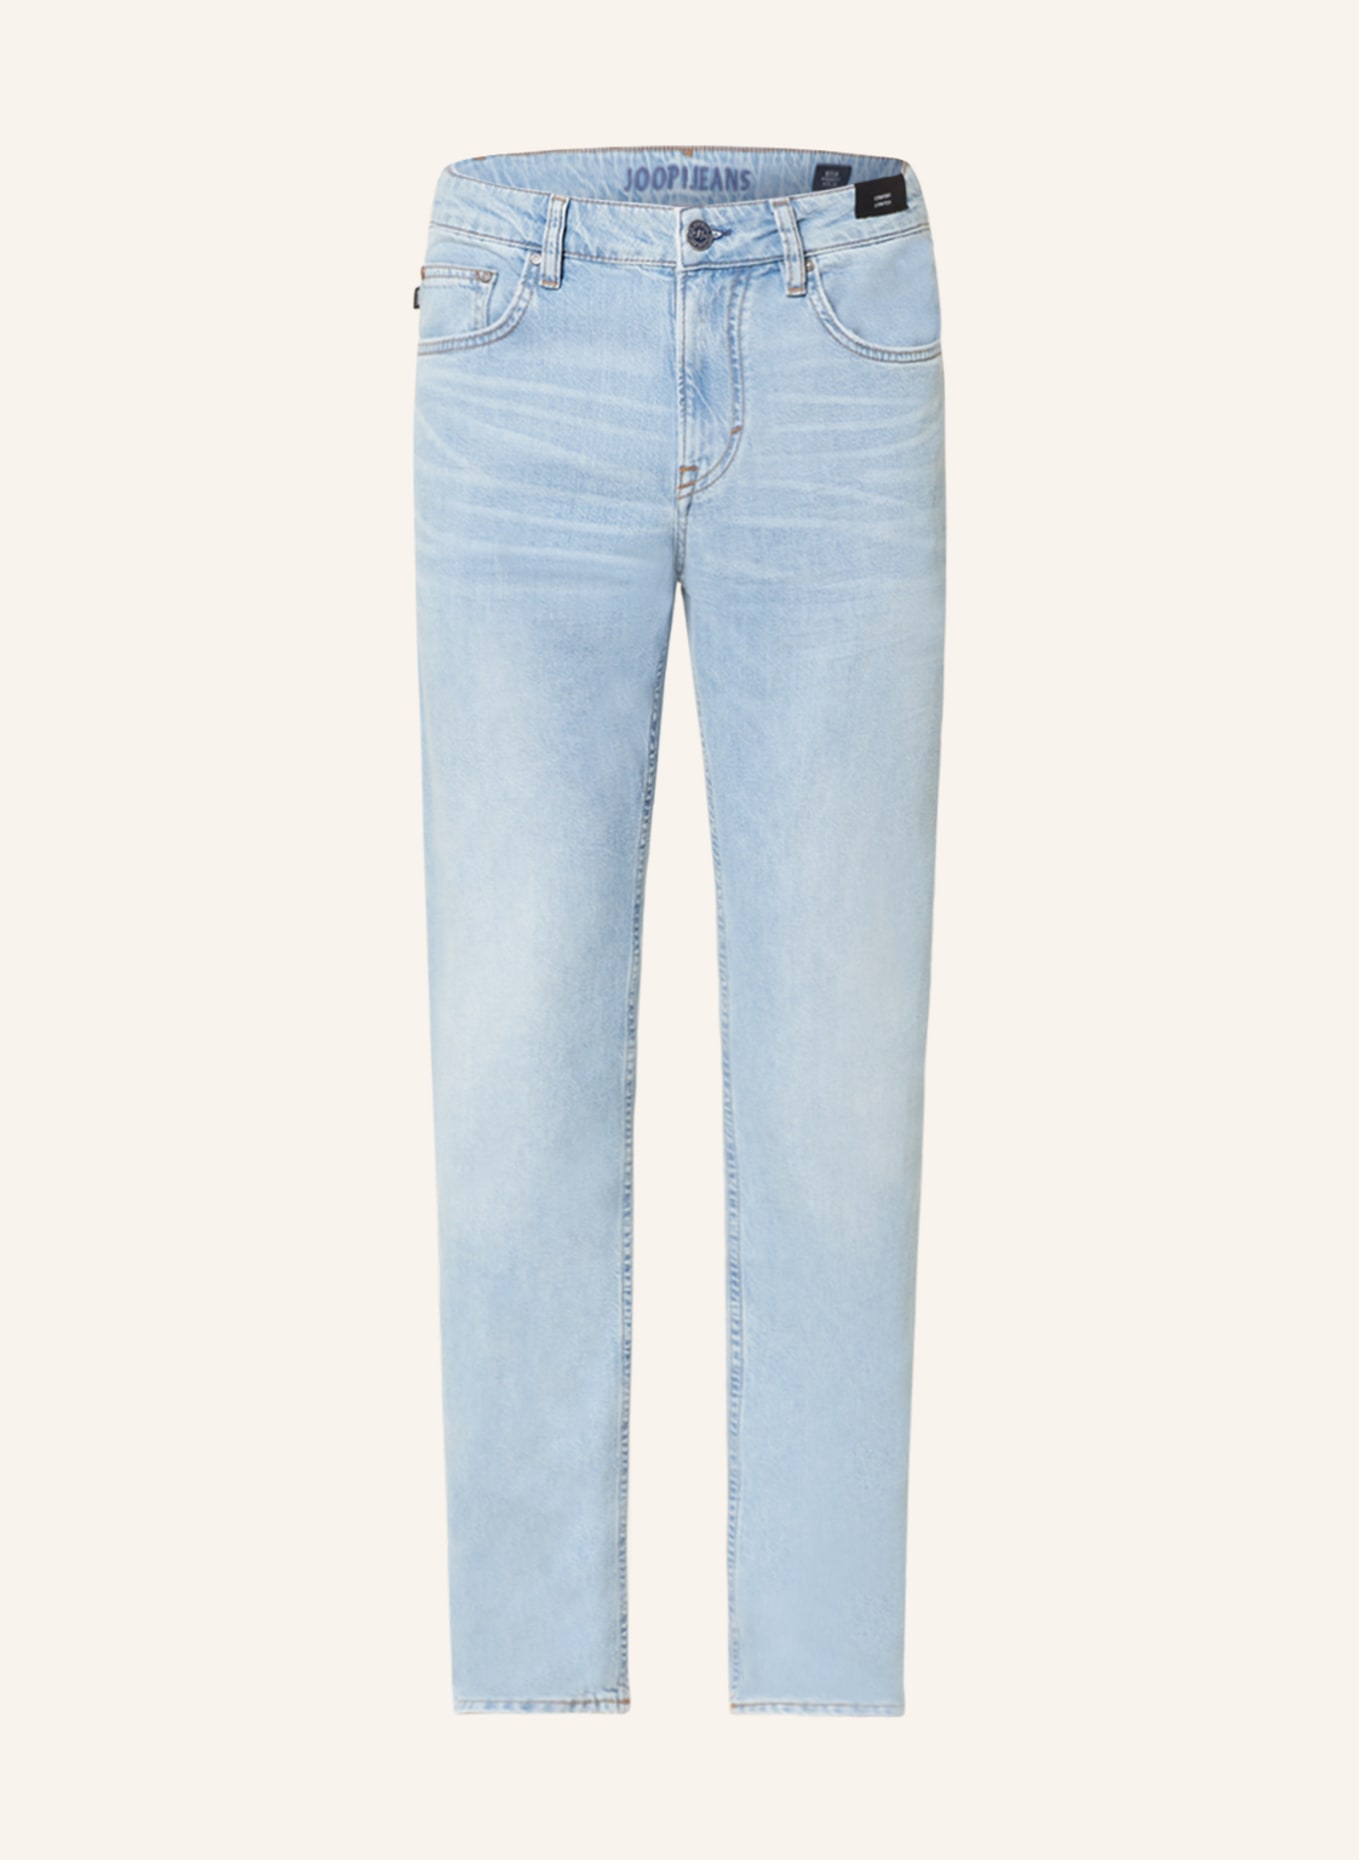 JOOP! JEANS Jeans MITCH Modern Fit, Farbe: 451 Lt/Pastel Blue             451 (Bild 1)